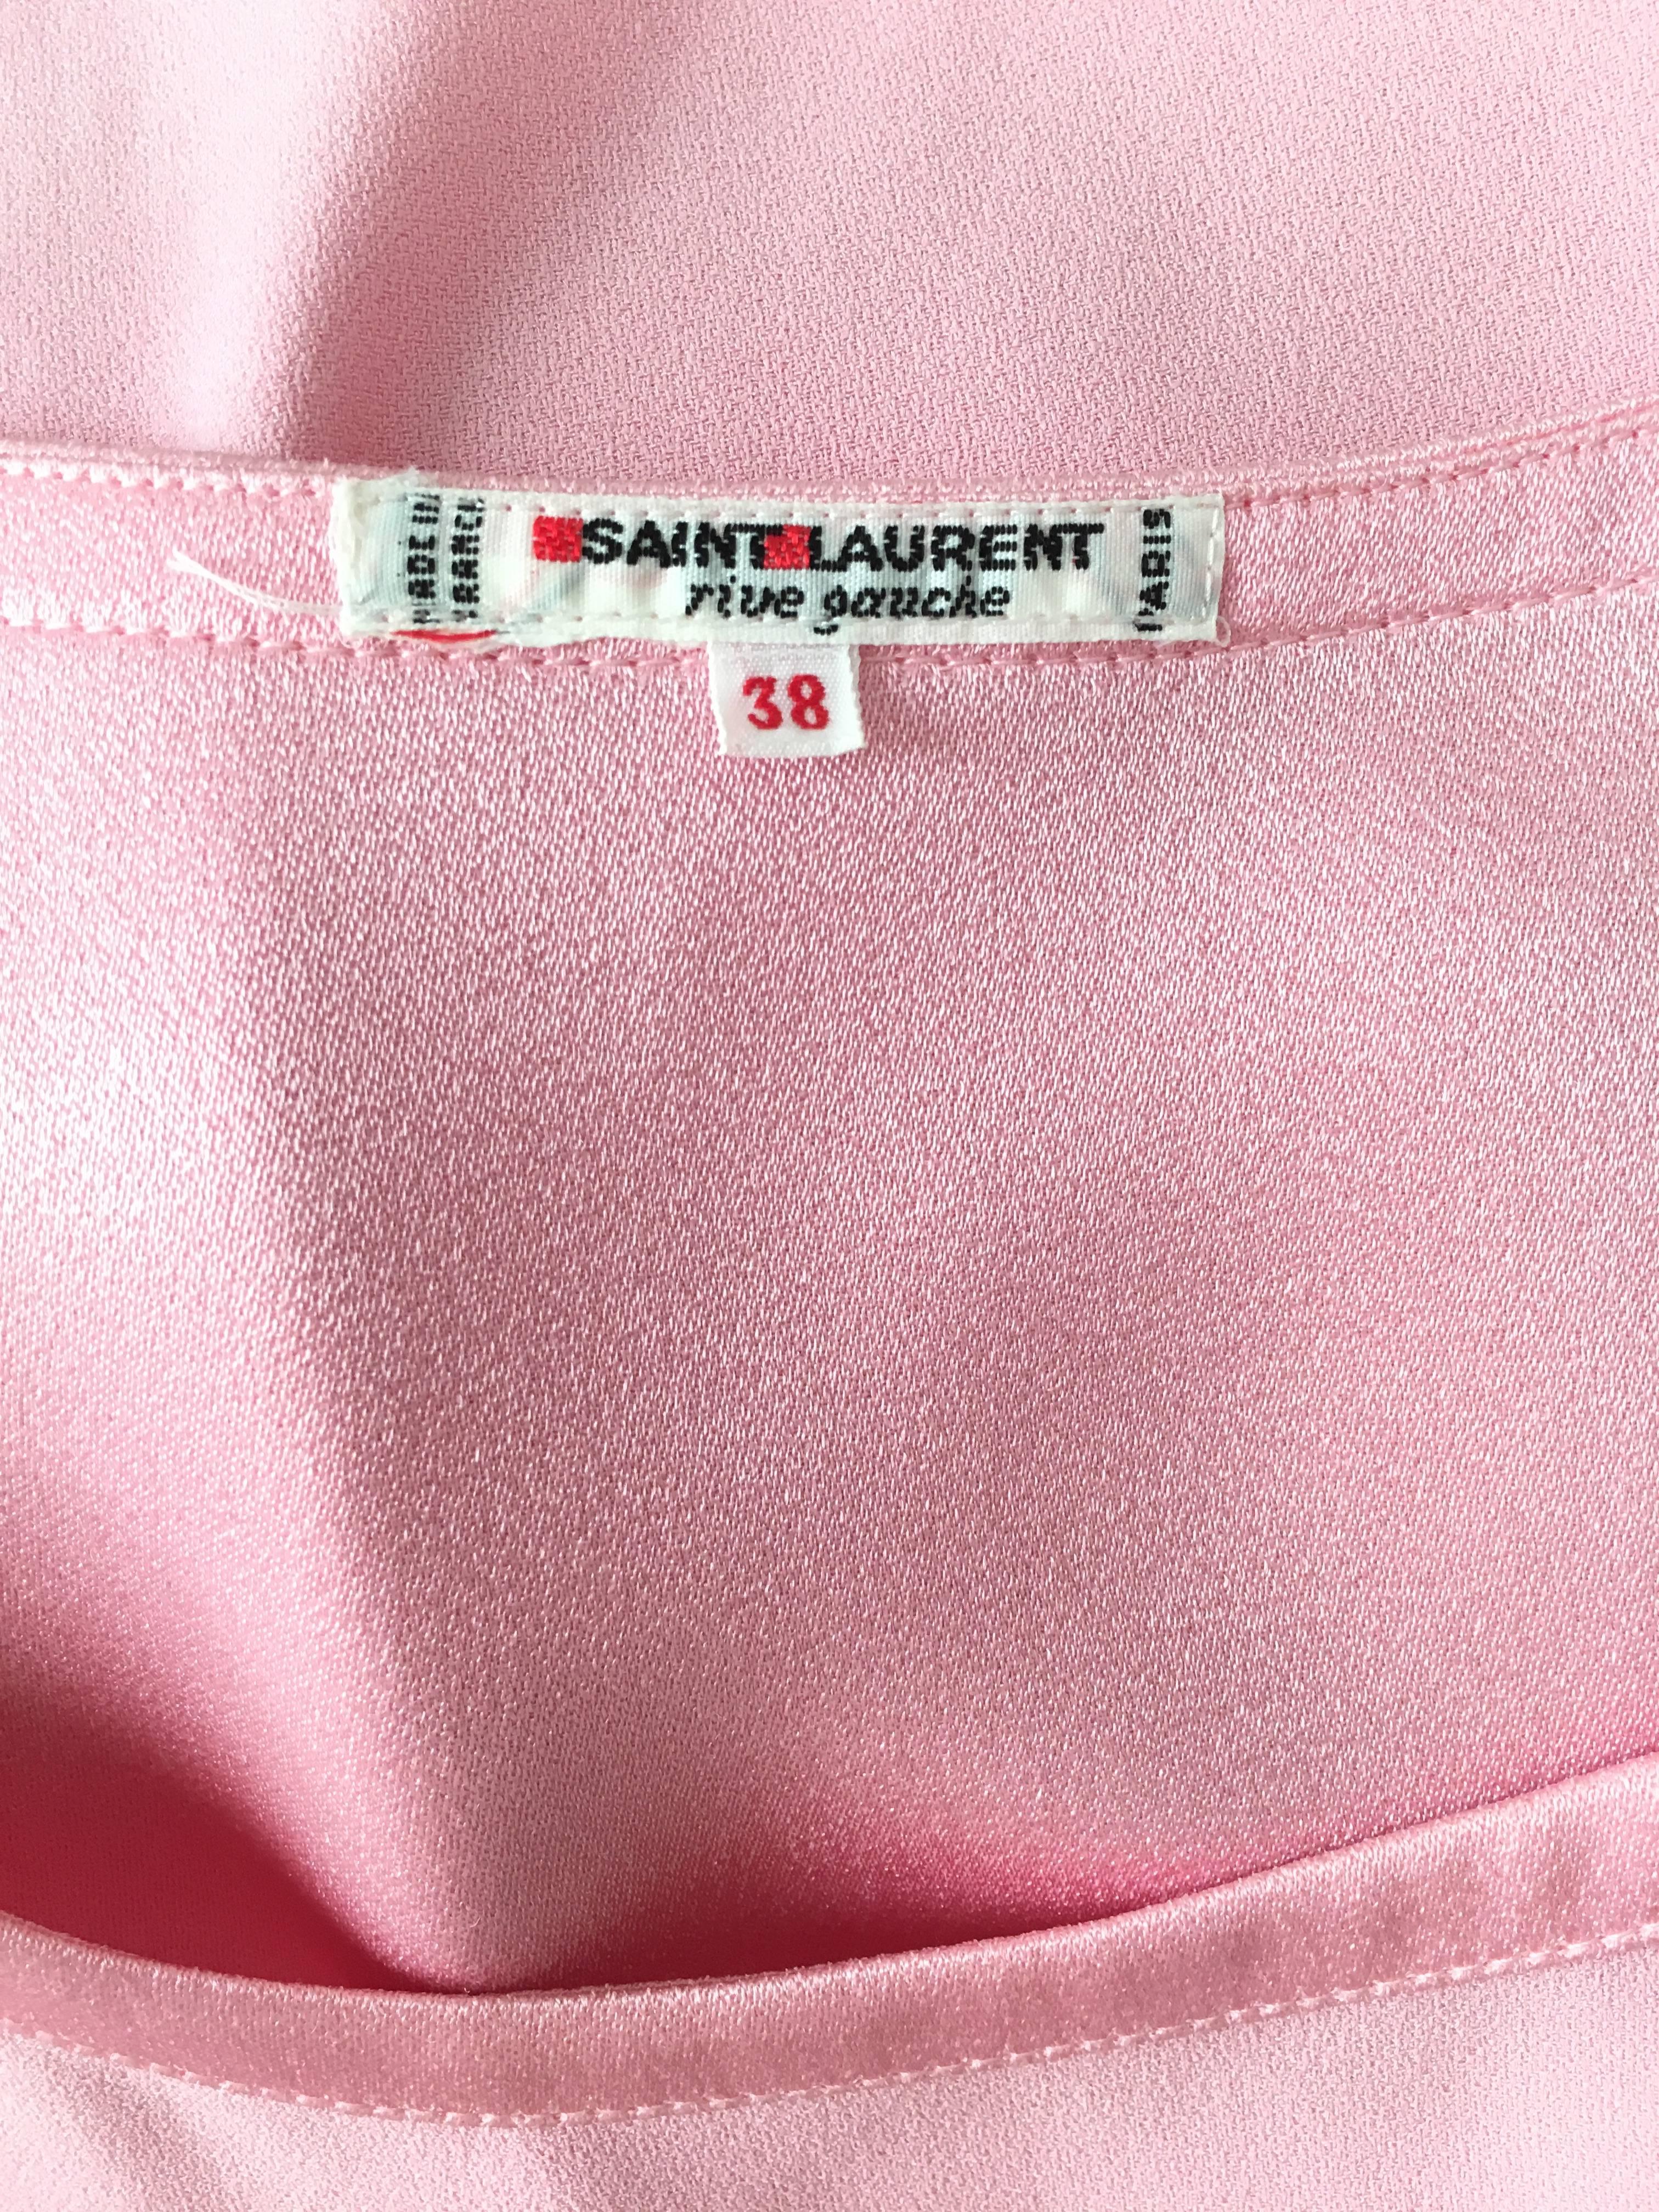 Saint Laurent Rive Gauche 1970s Pink Silk Crepe Sleeveless Blouse Size 6. For Sale 4